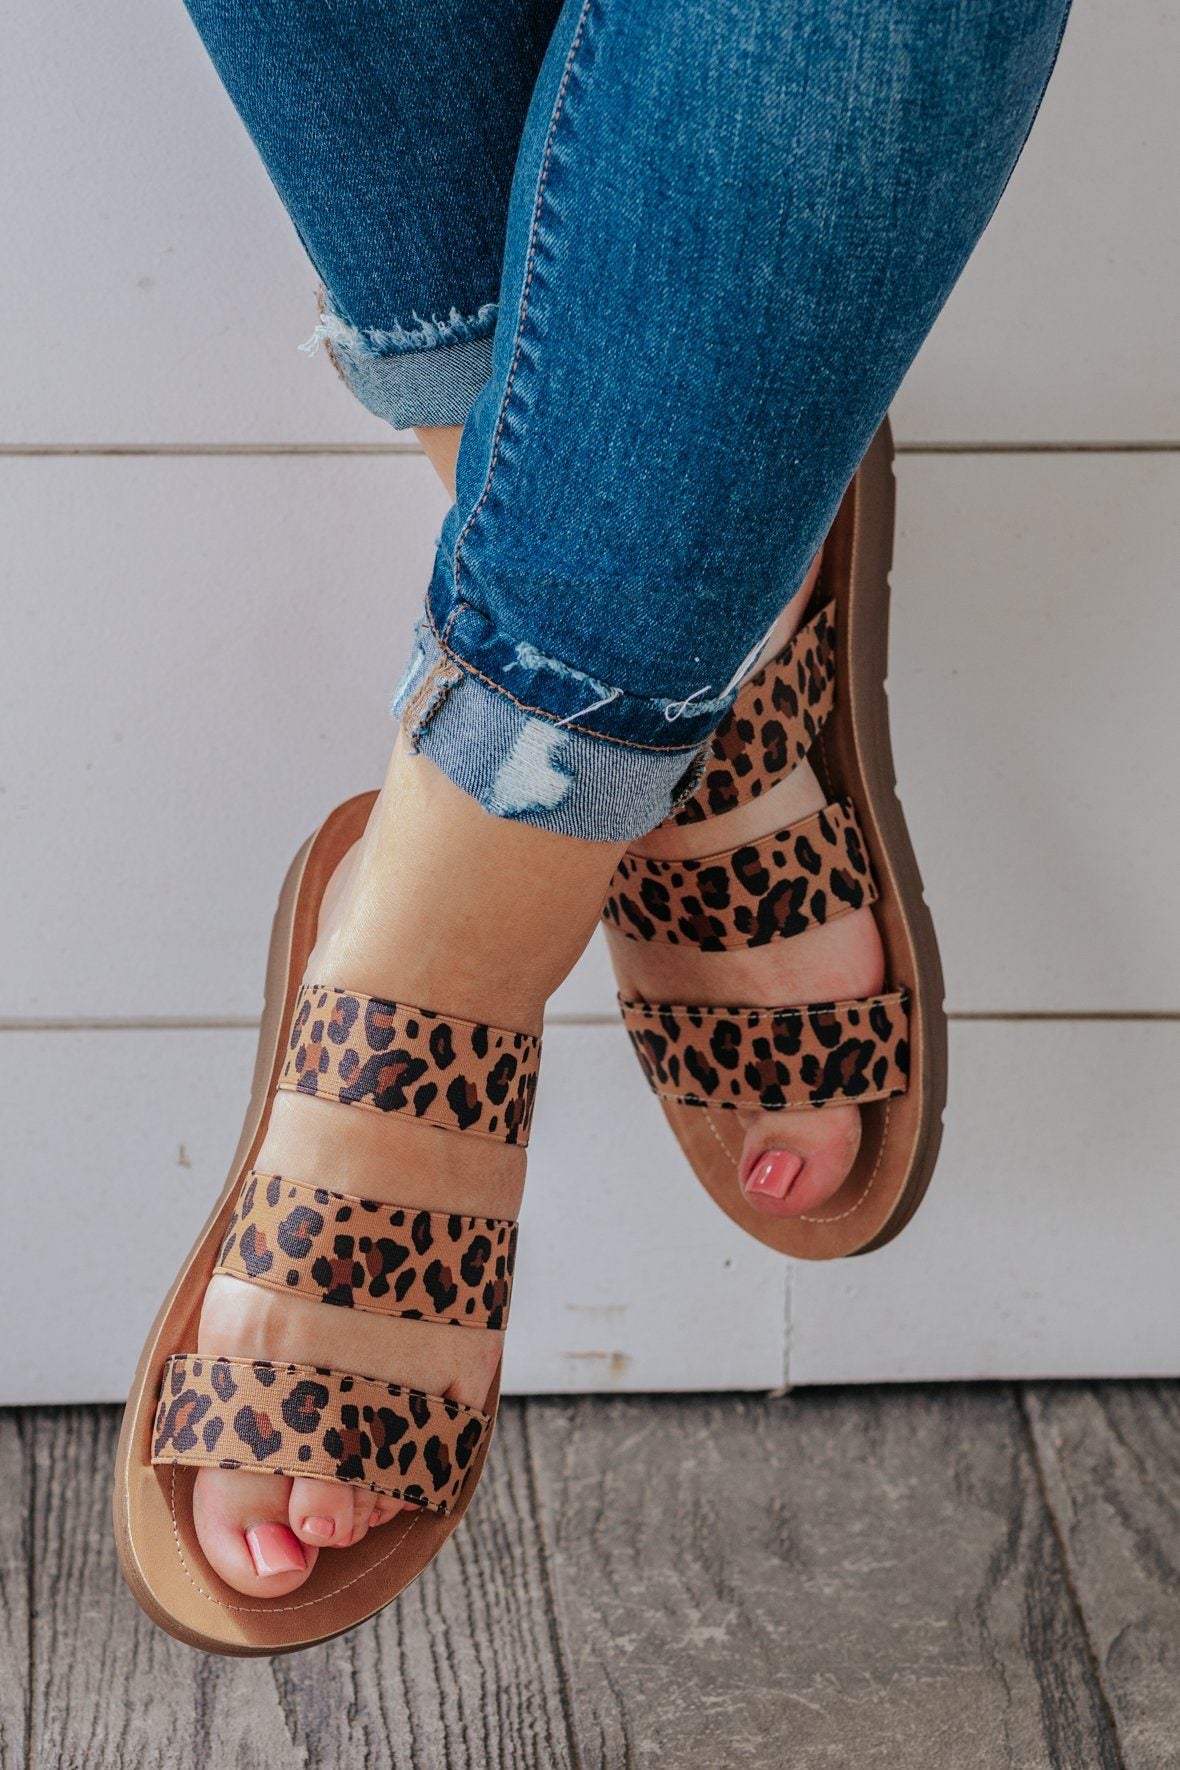 wide width leopard sandals